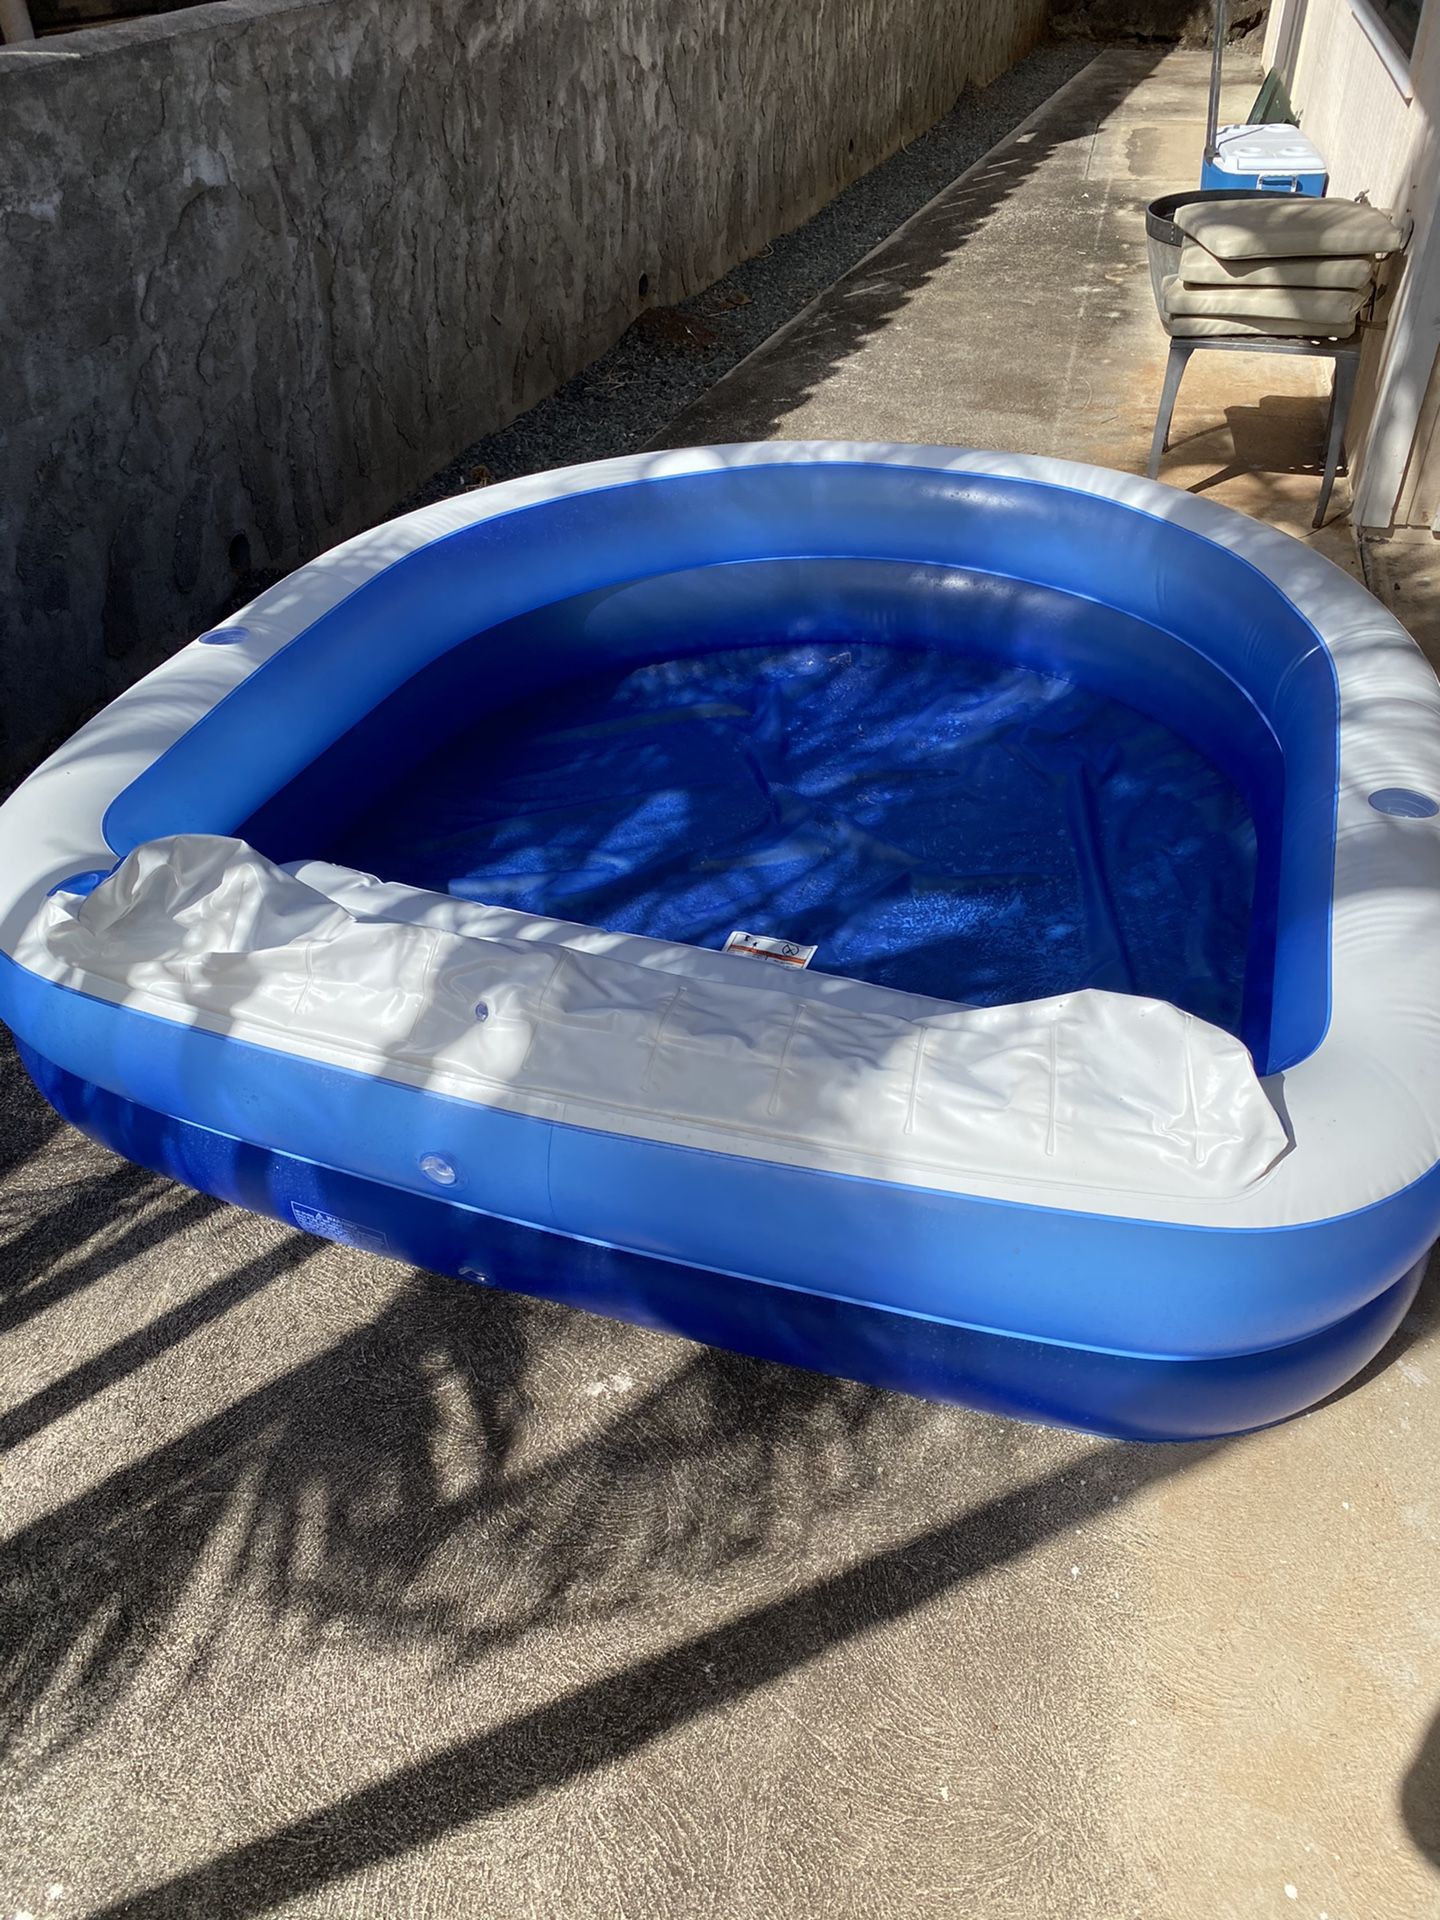 Used Intex swim center inflatable pool